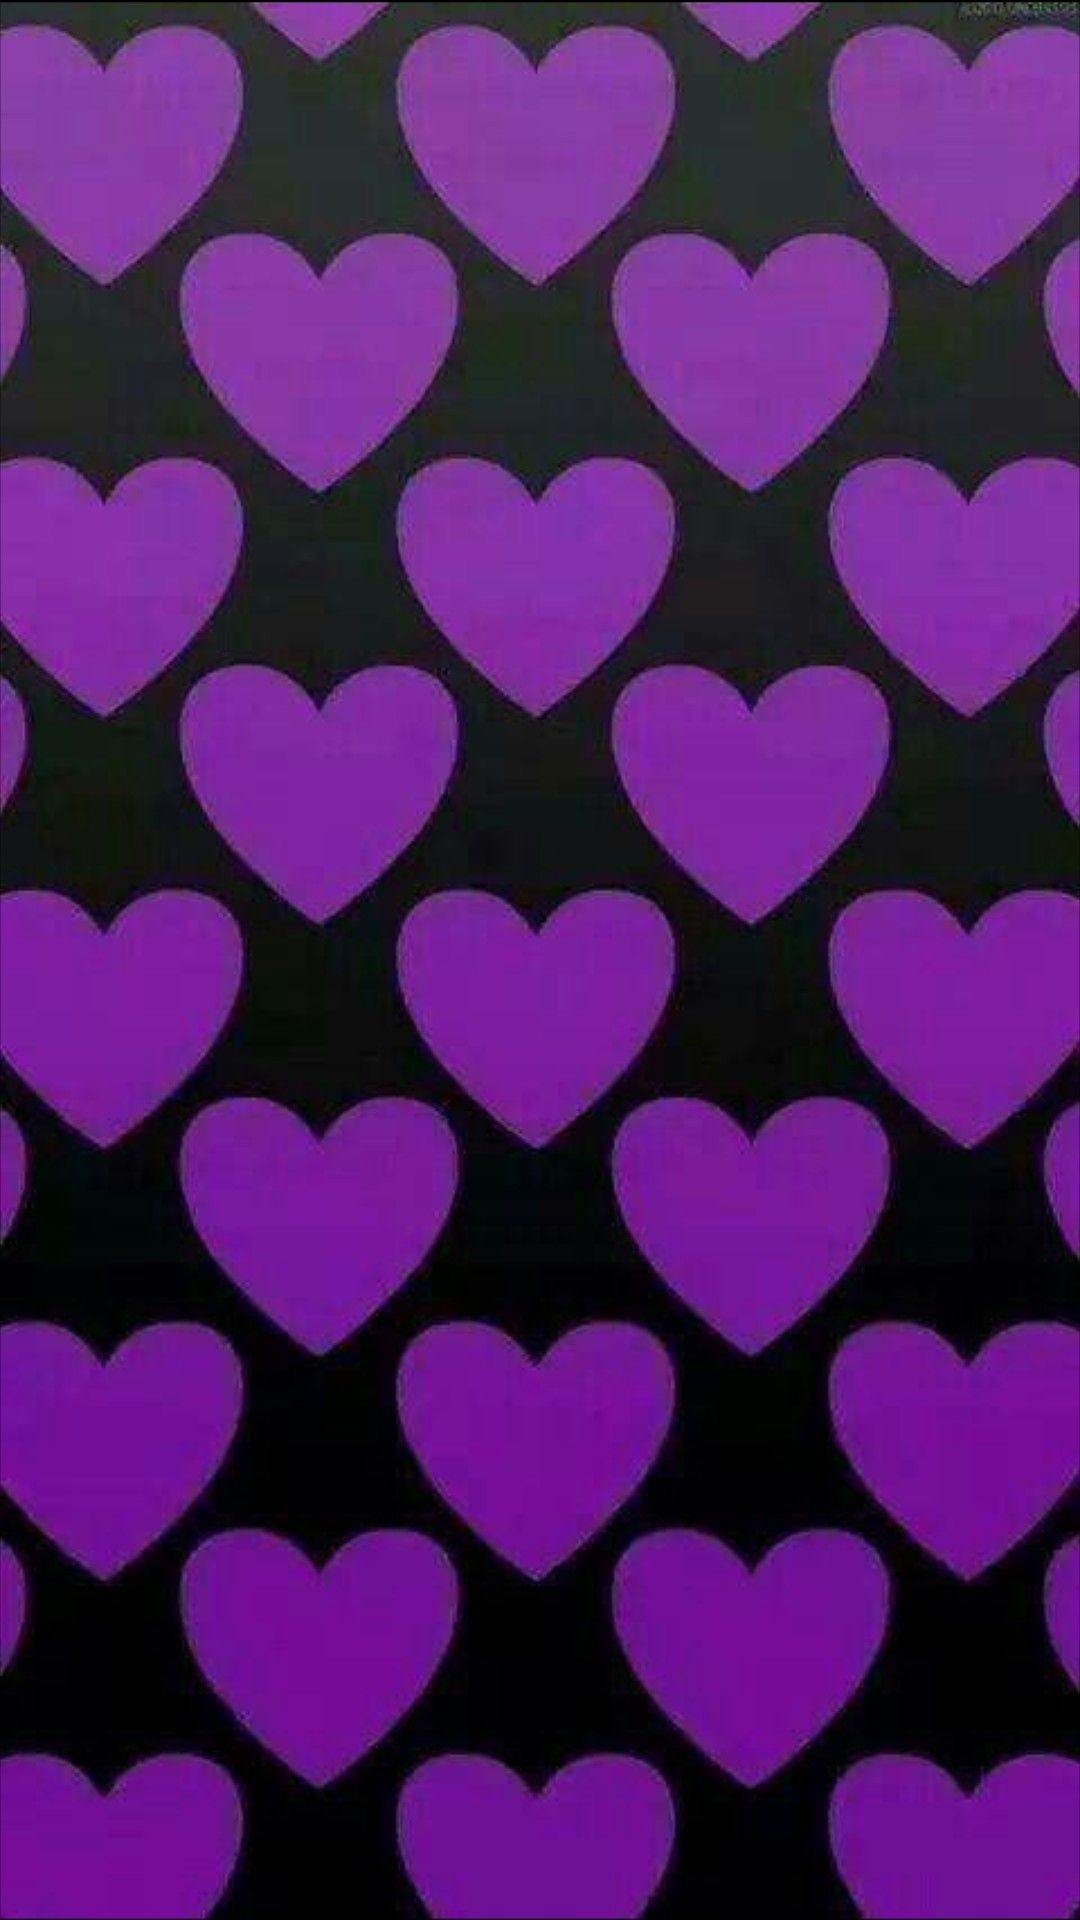 1080x1920 Black and purple hearts | Heart wallpaper, Heart iphone wallpaper, Butterfly wallpaper iphone